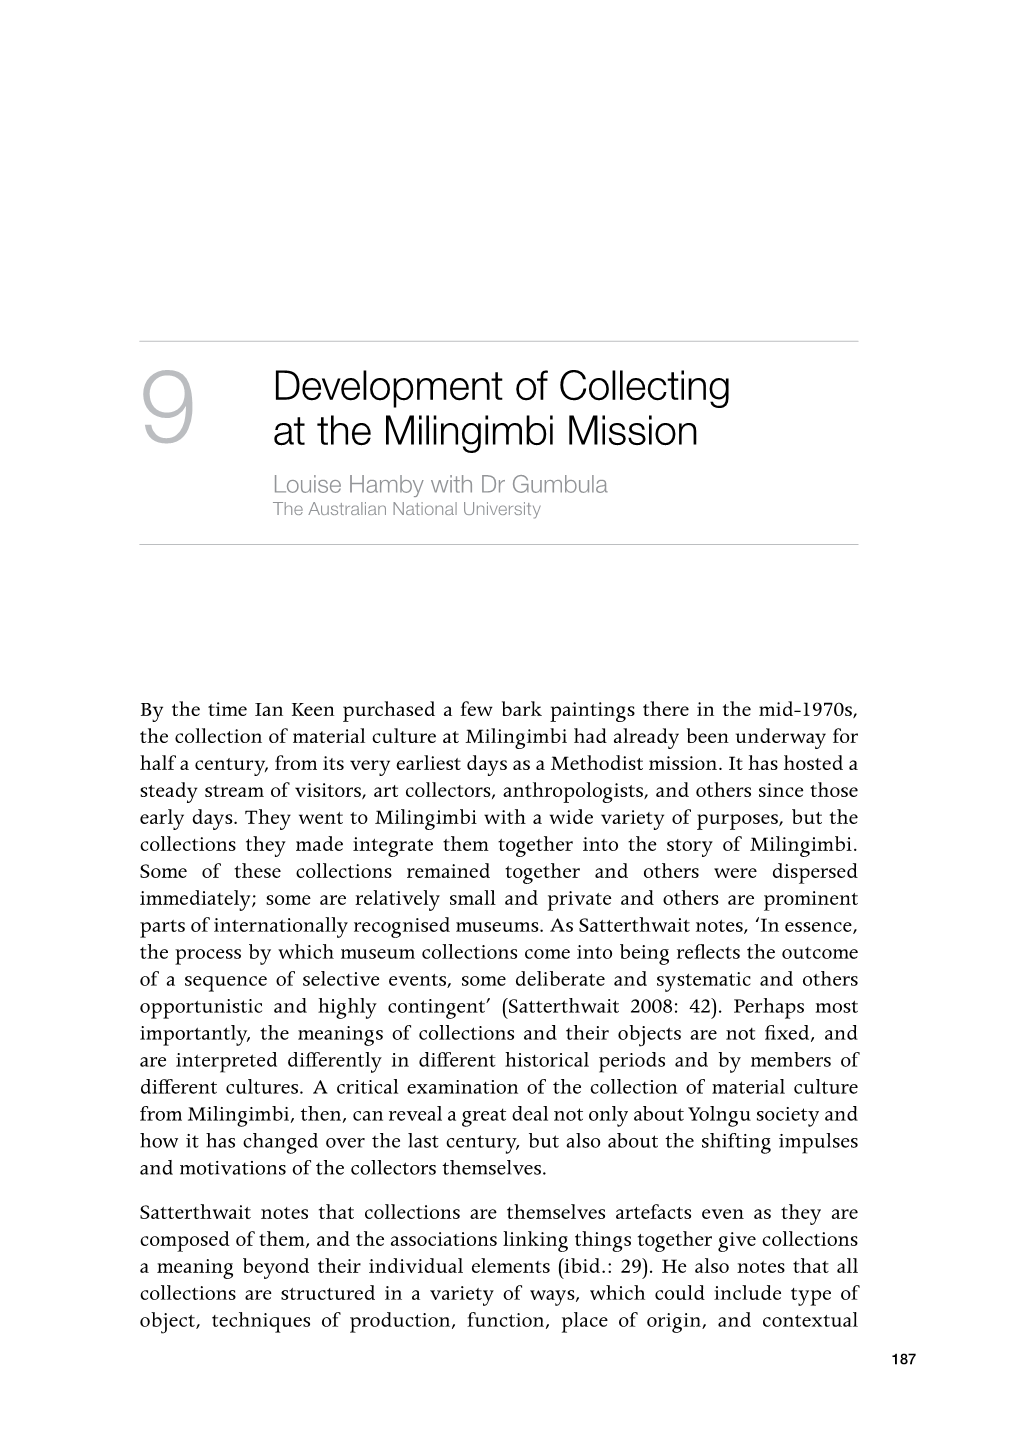 Development of Collecting at the Milingimbi Mission